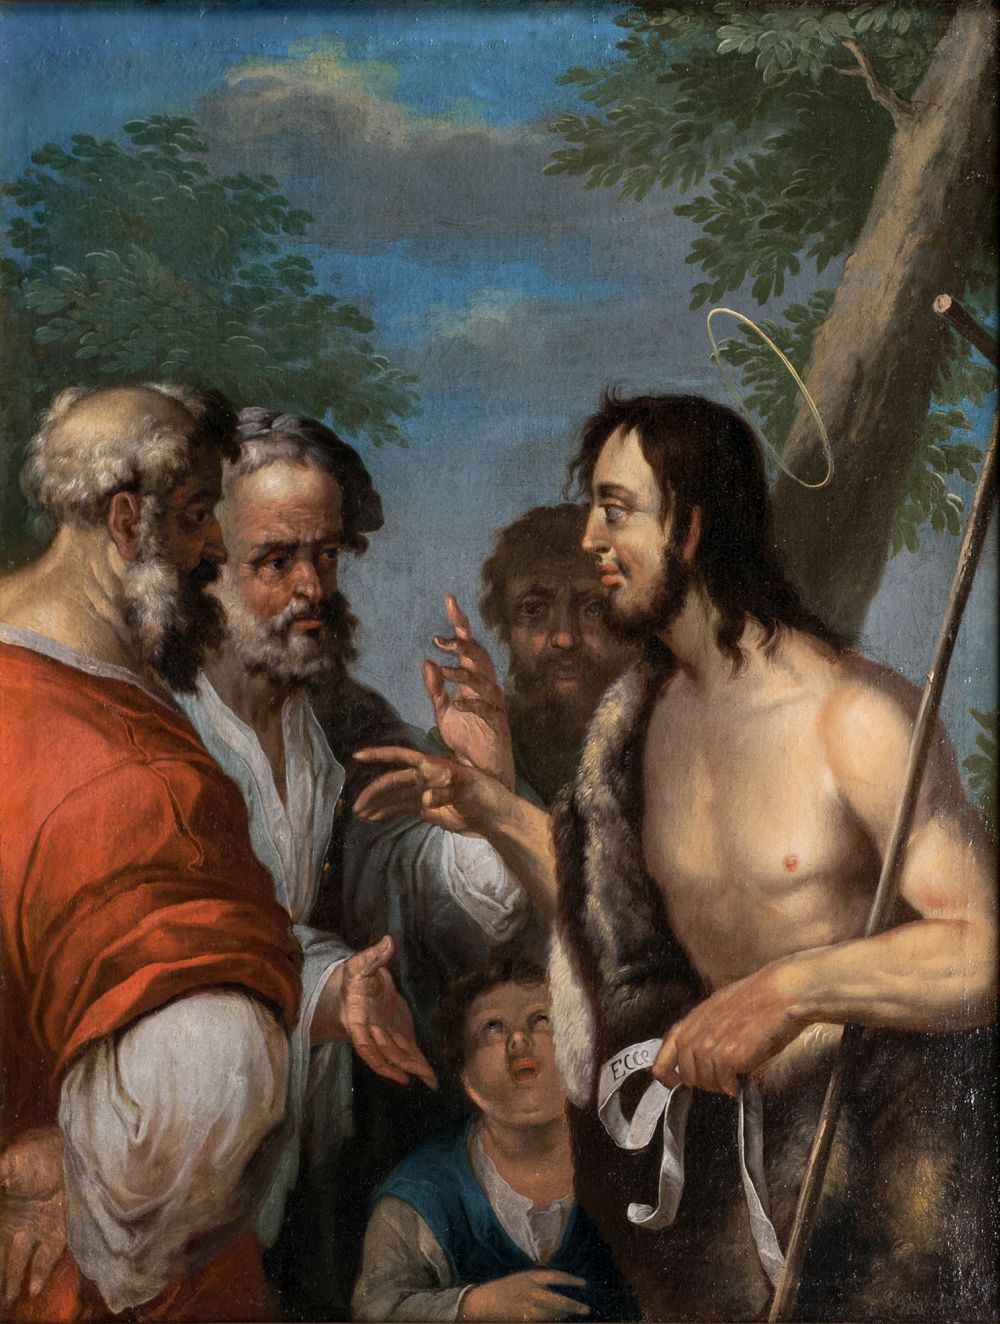 The Preaching of St. John the Baptist